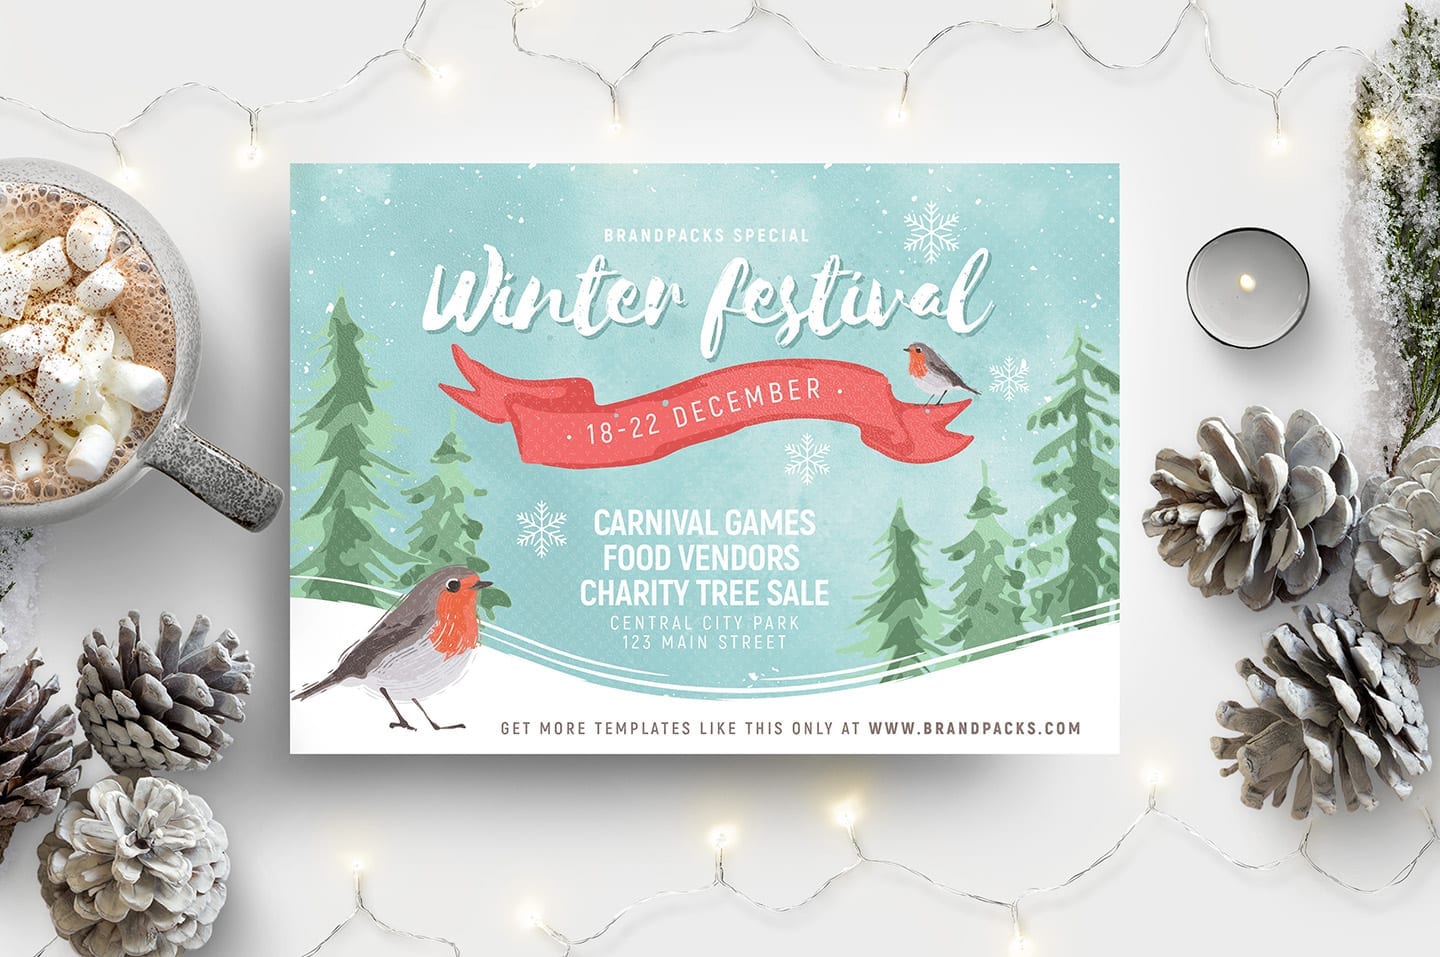 Winter Festival Flyer Template for Photoshop & Illustrator